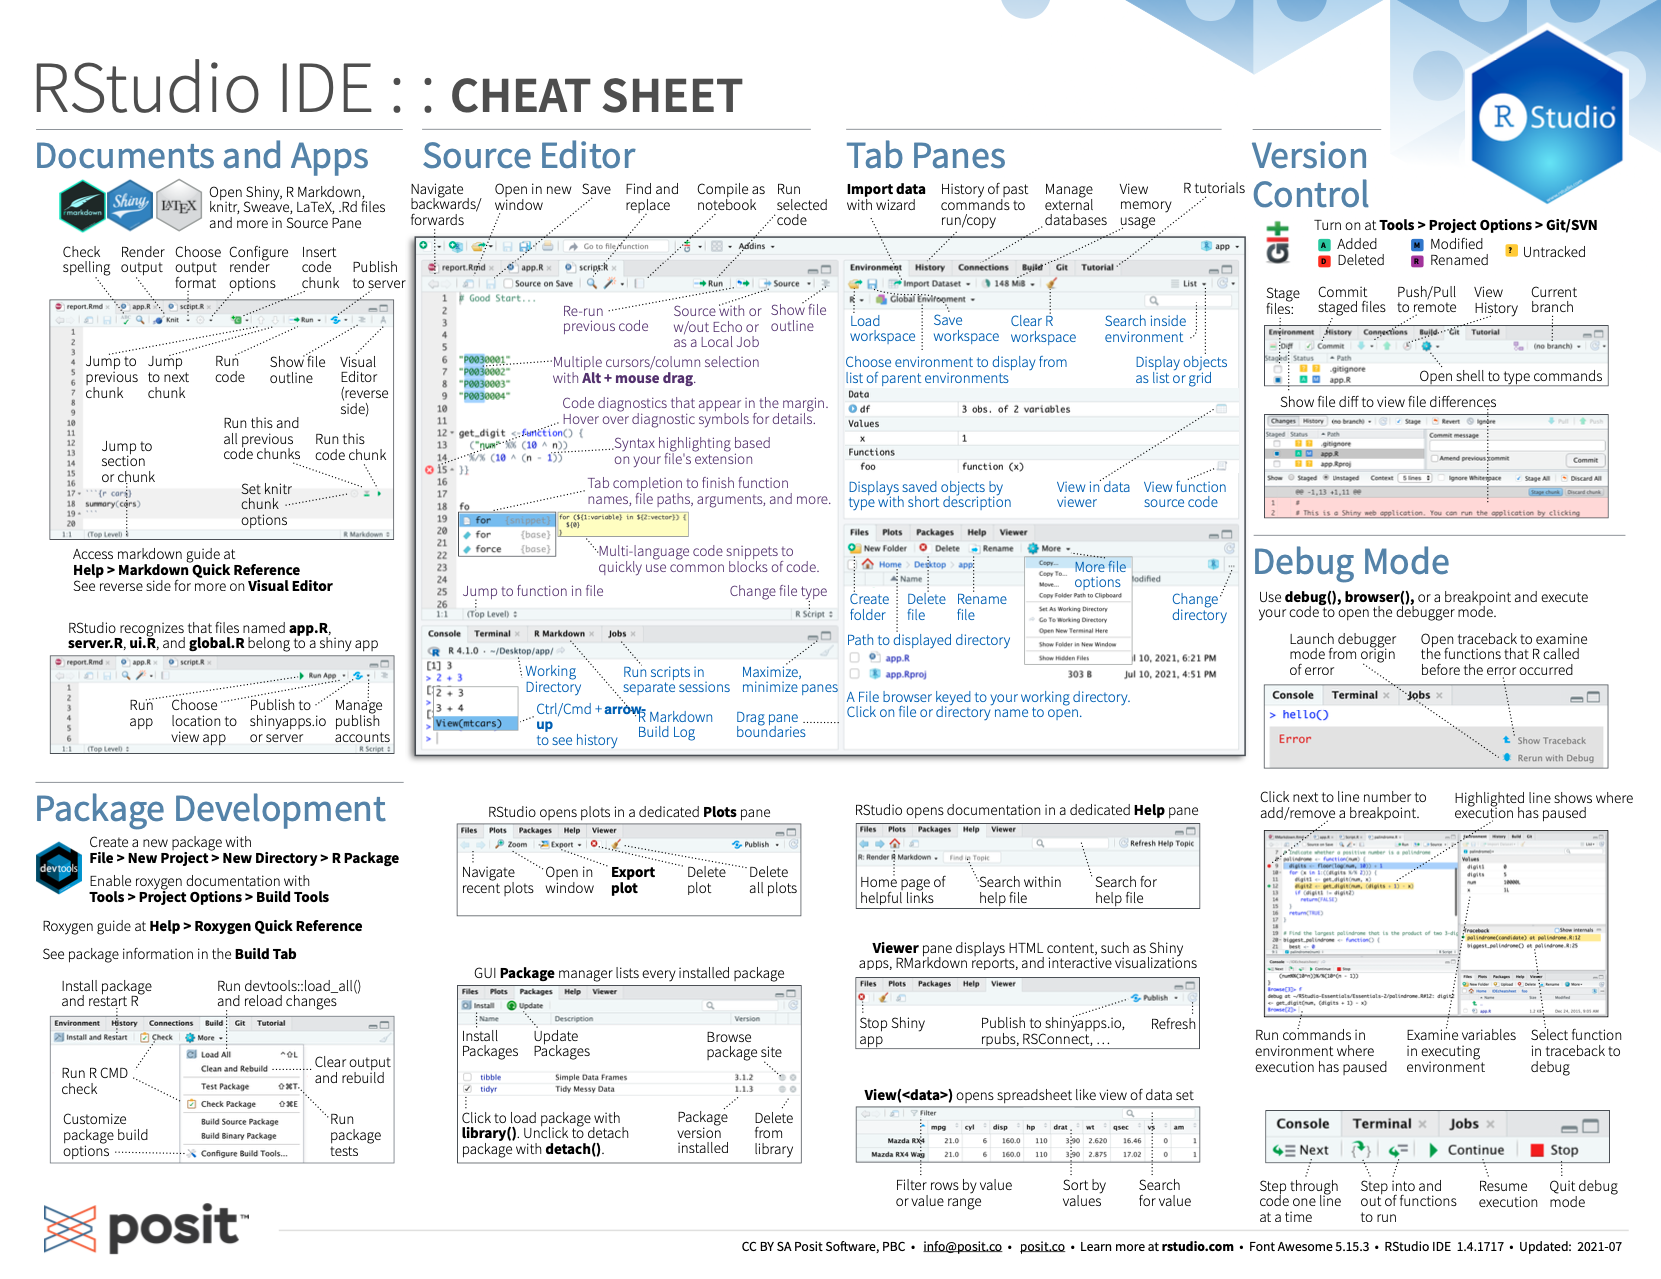 RStudio cheatsheet (from RStudio Cheat Sheets).